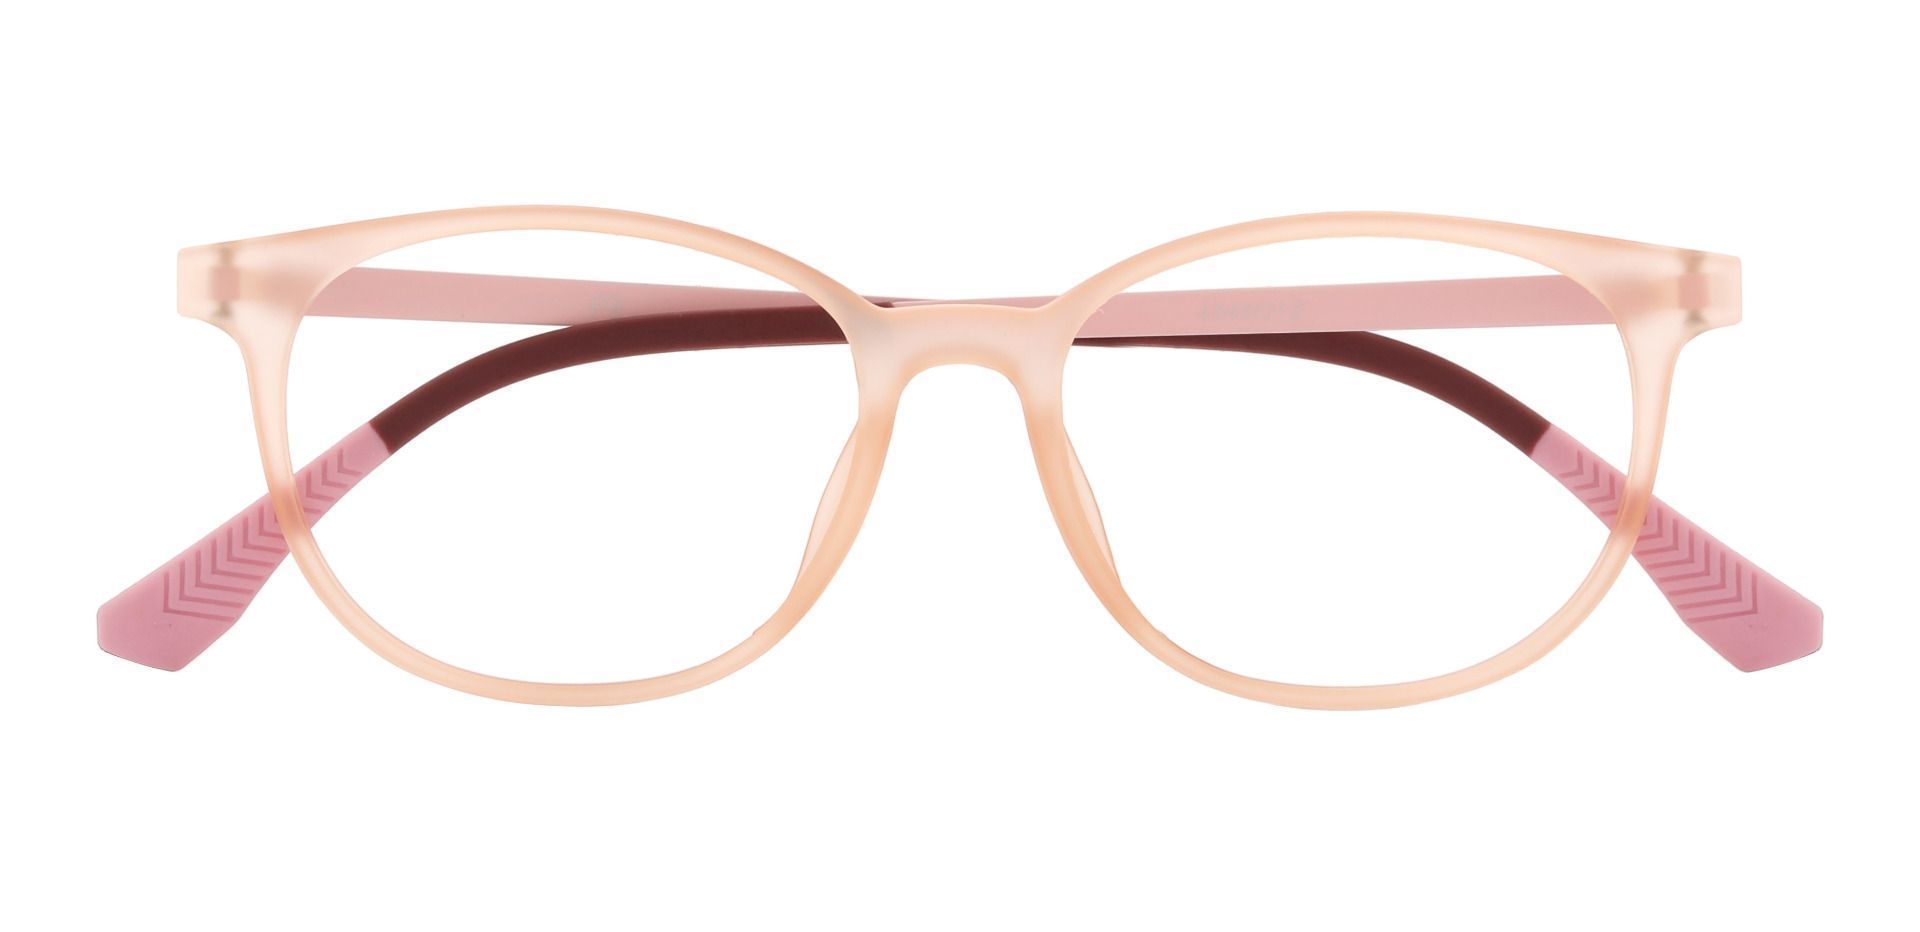 Hannigan Oval Prescription Glasses - Pink